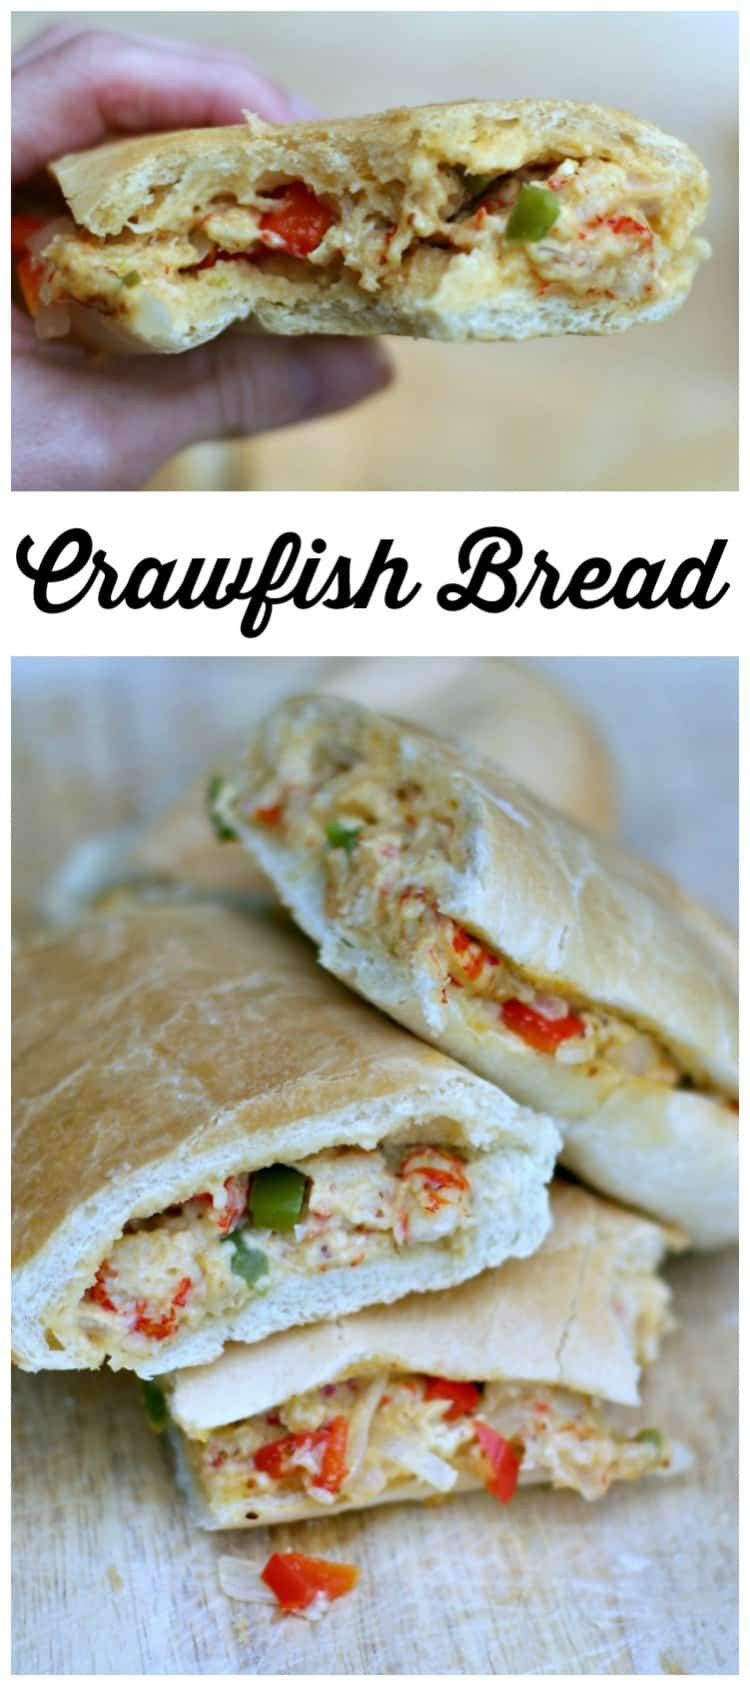 Jazz Fest Crawfish Bread Recipe
 New Orleans Jazz Fest Easy Crawfish Bread Recipe